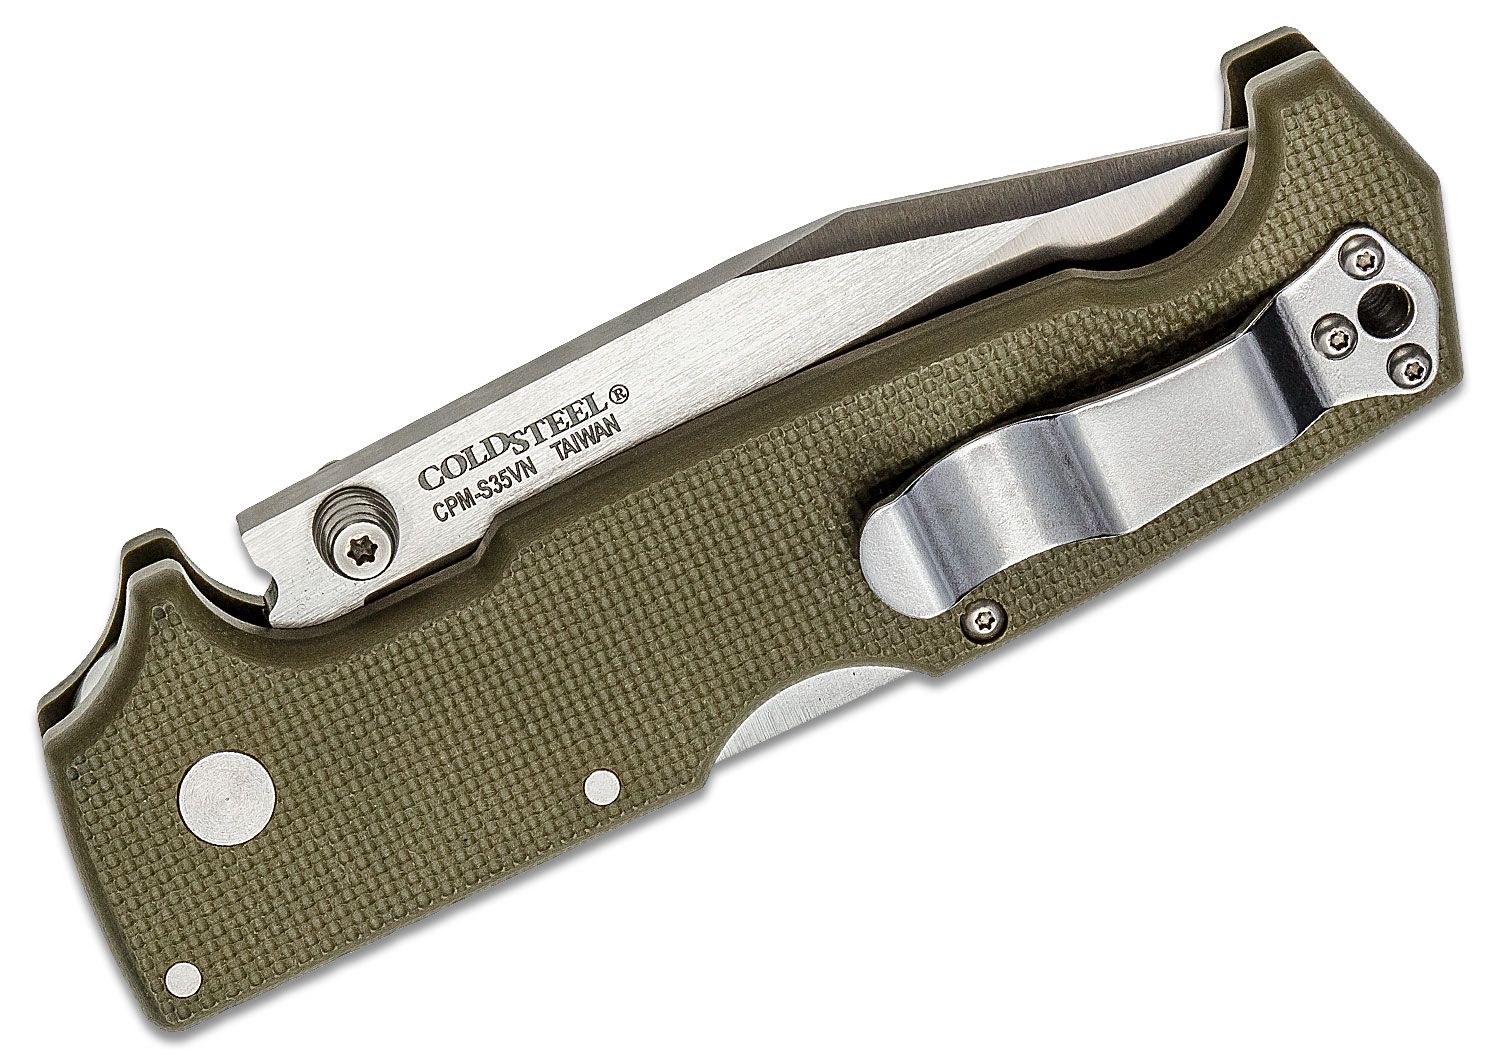 Cold Steel - SR1 Clip Point knife - S35VN - 62L OD Green G10 - folding knife